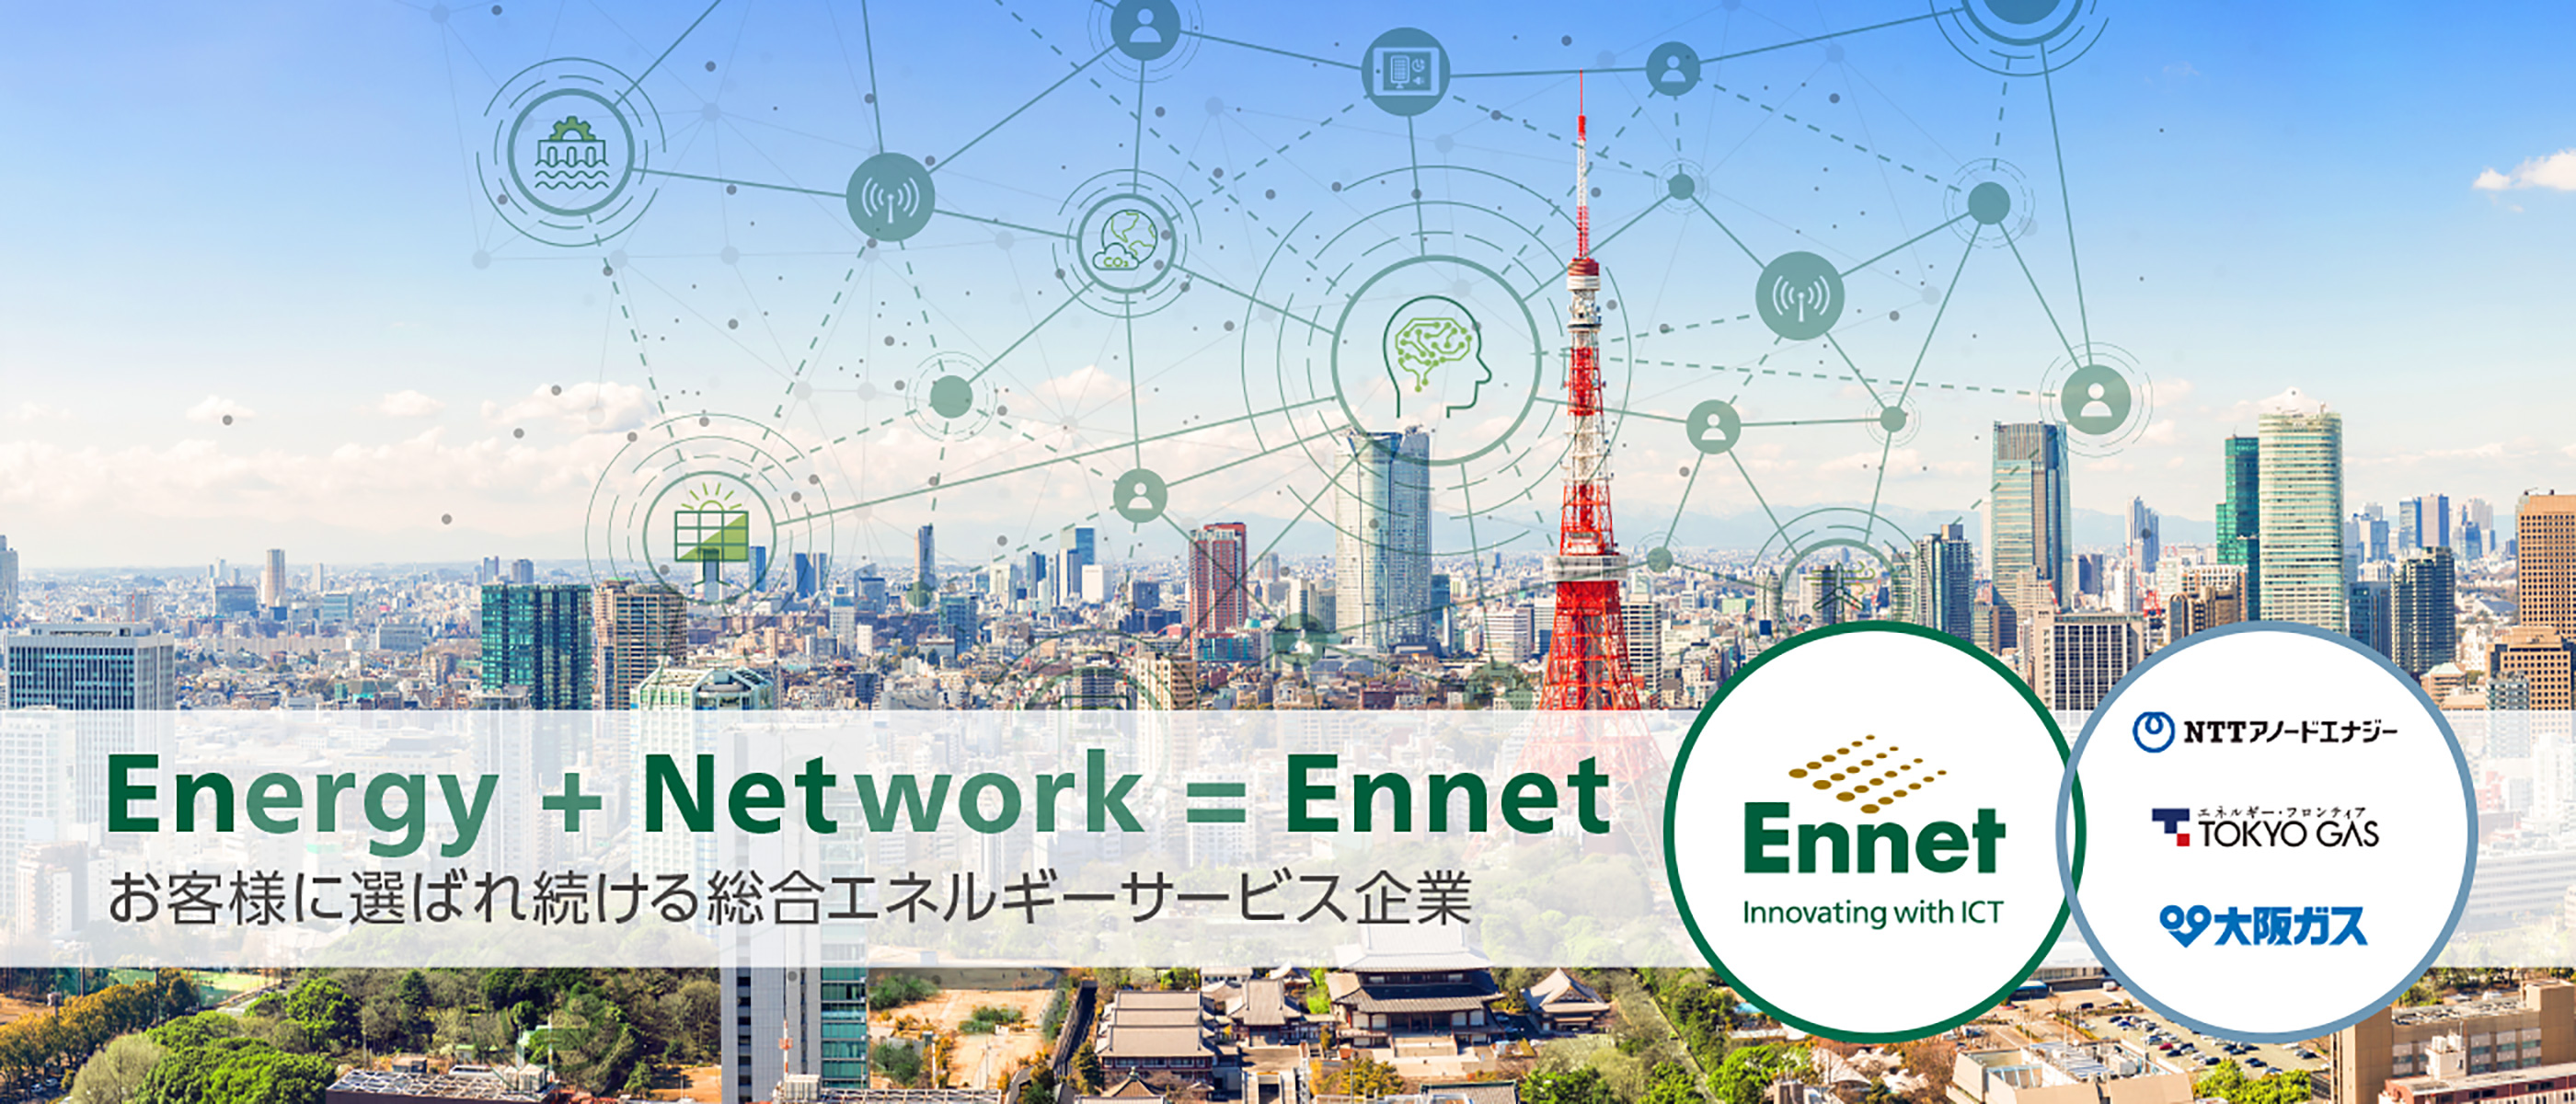 Energy + Network = Ennet お客様に選ばれ続ける総合エネルギーサービス企業